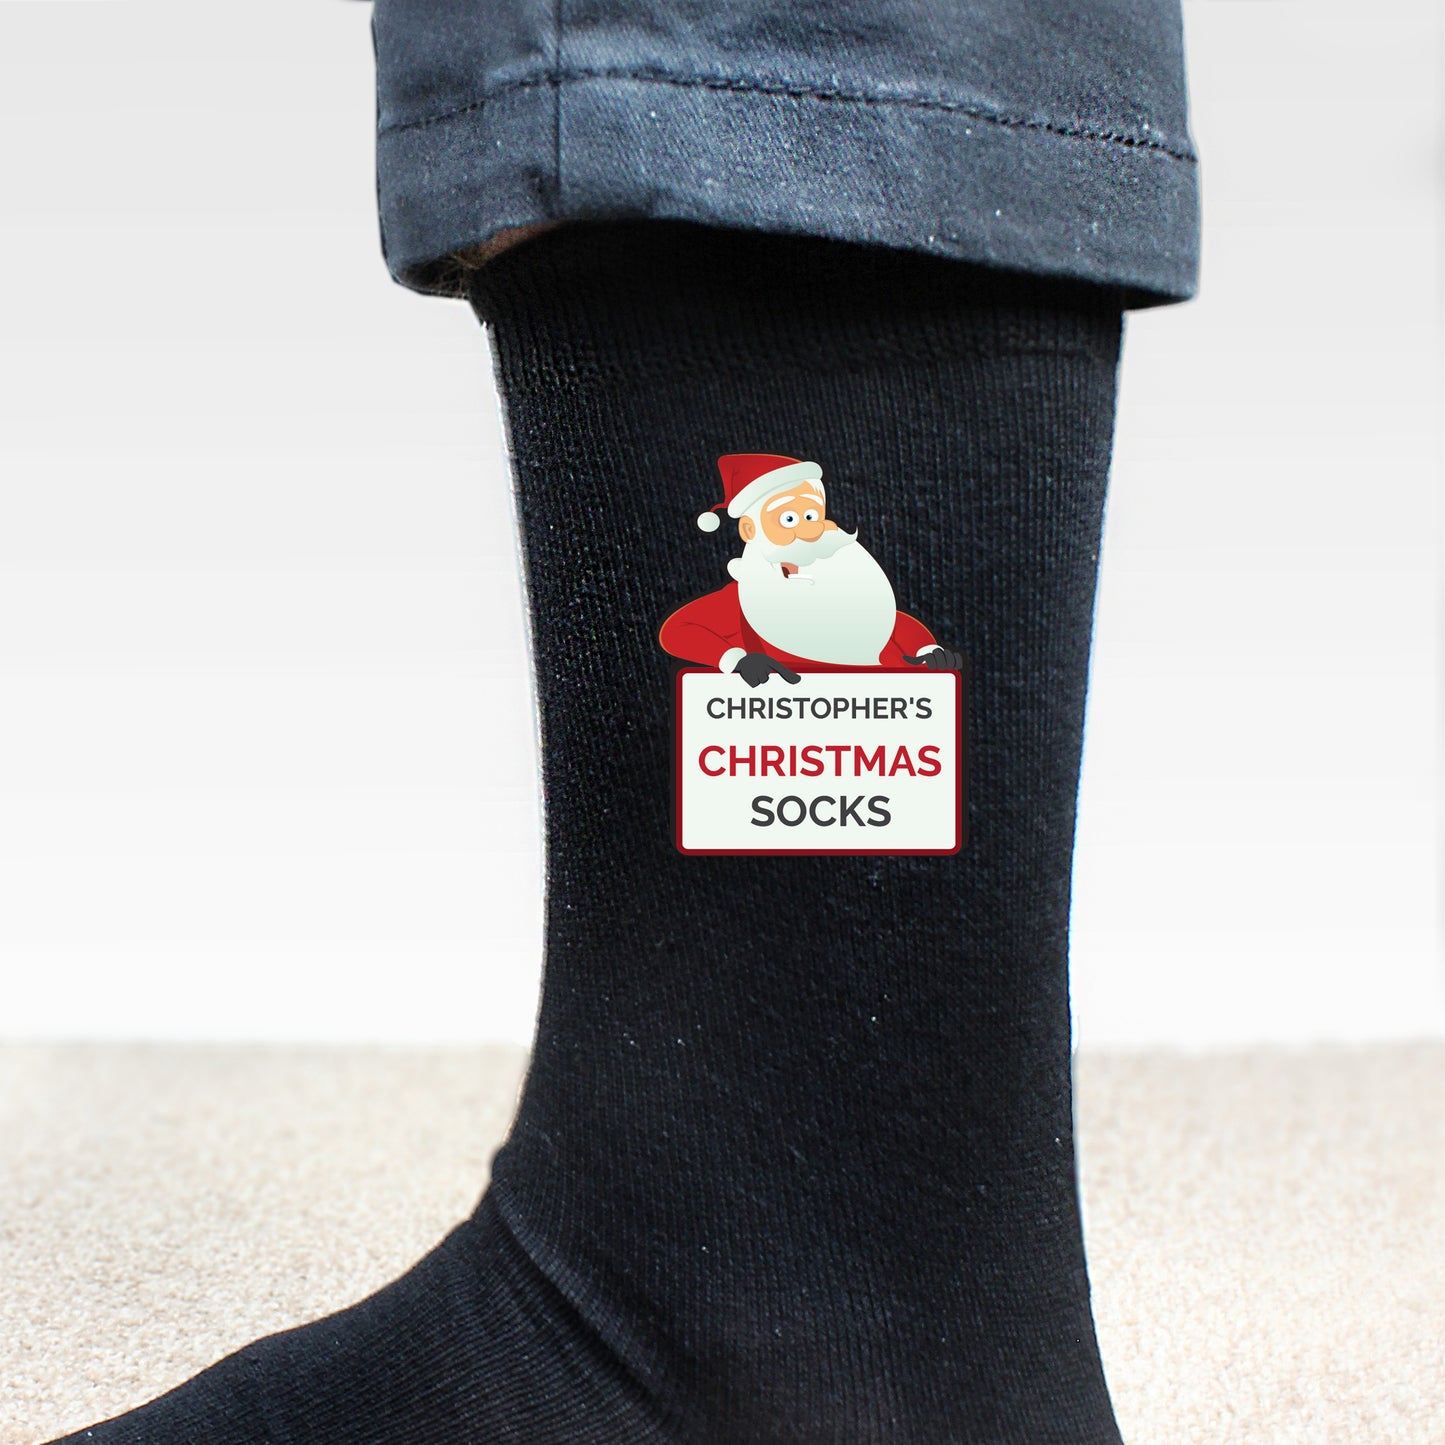 Personalised Santa Claus Christmas Socks - Personalise It!